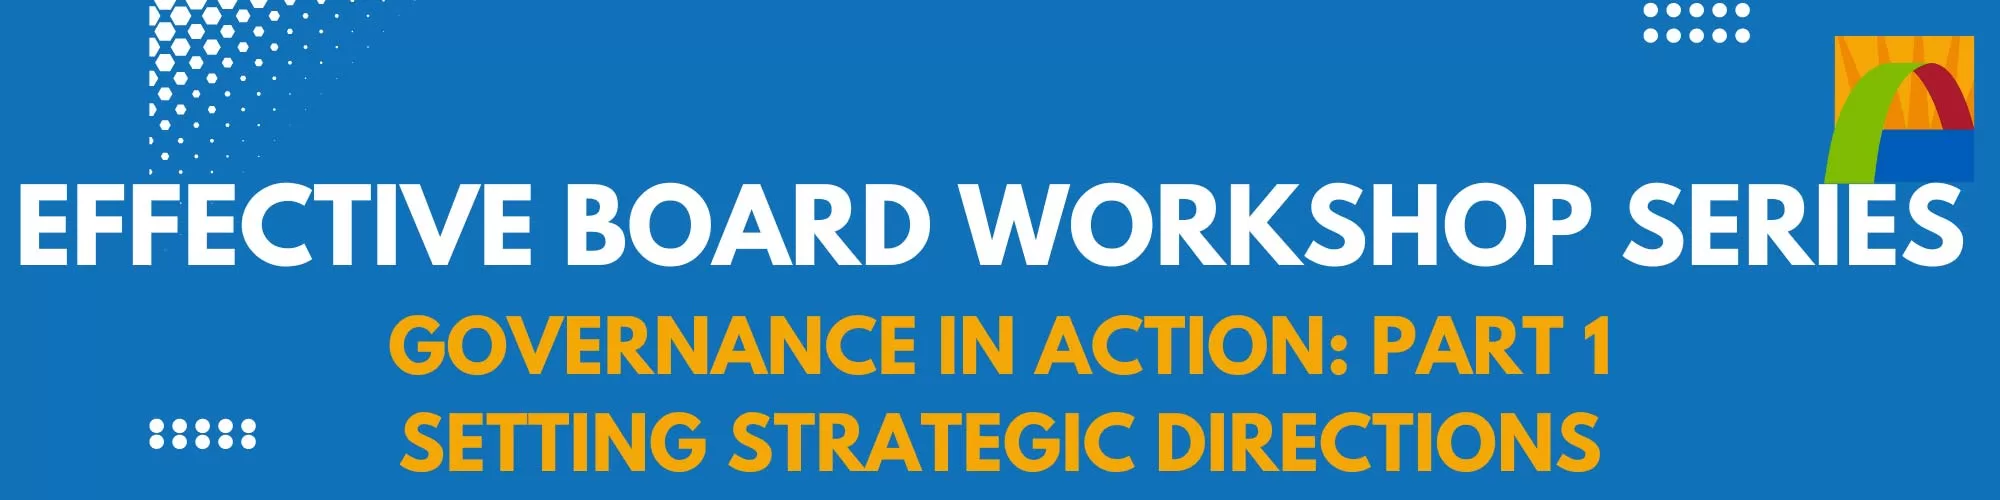 Banner for Effective Board Workshop Series, Governance in action part 1